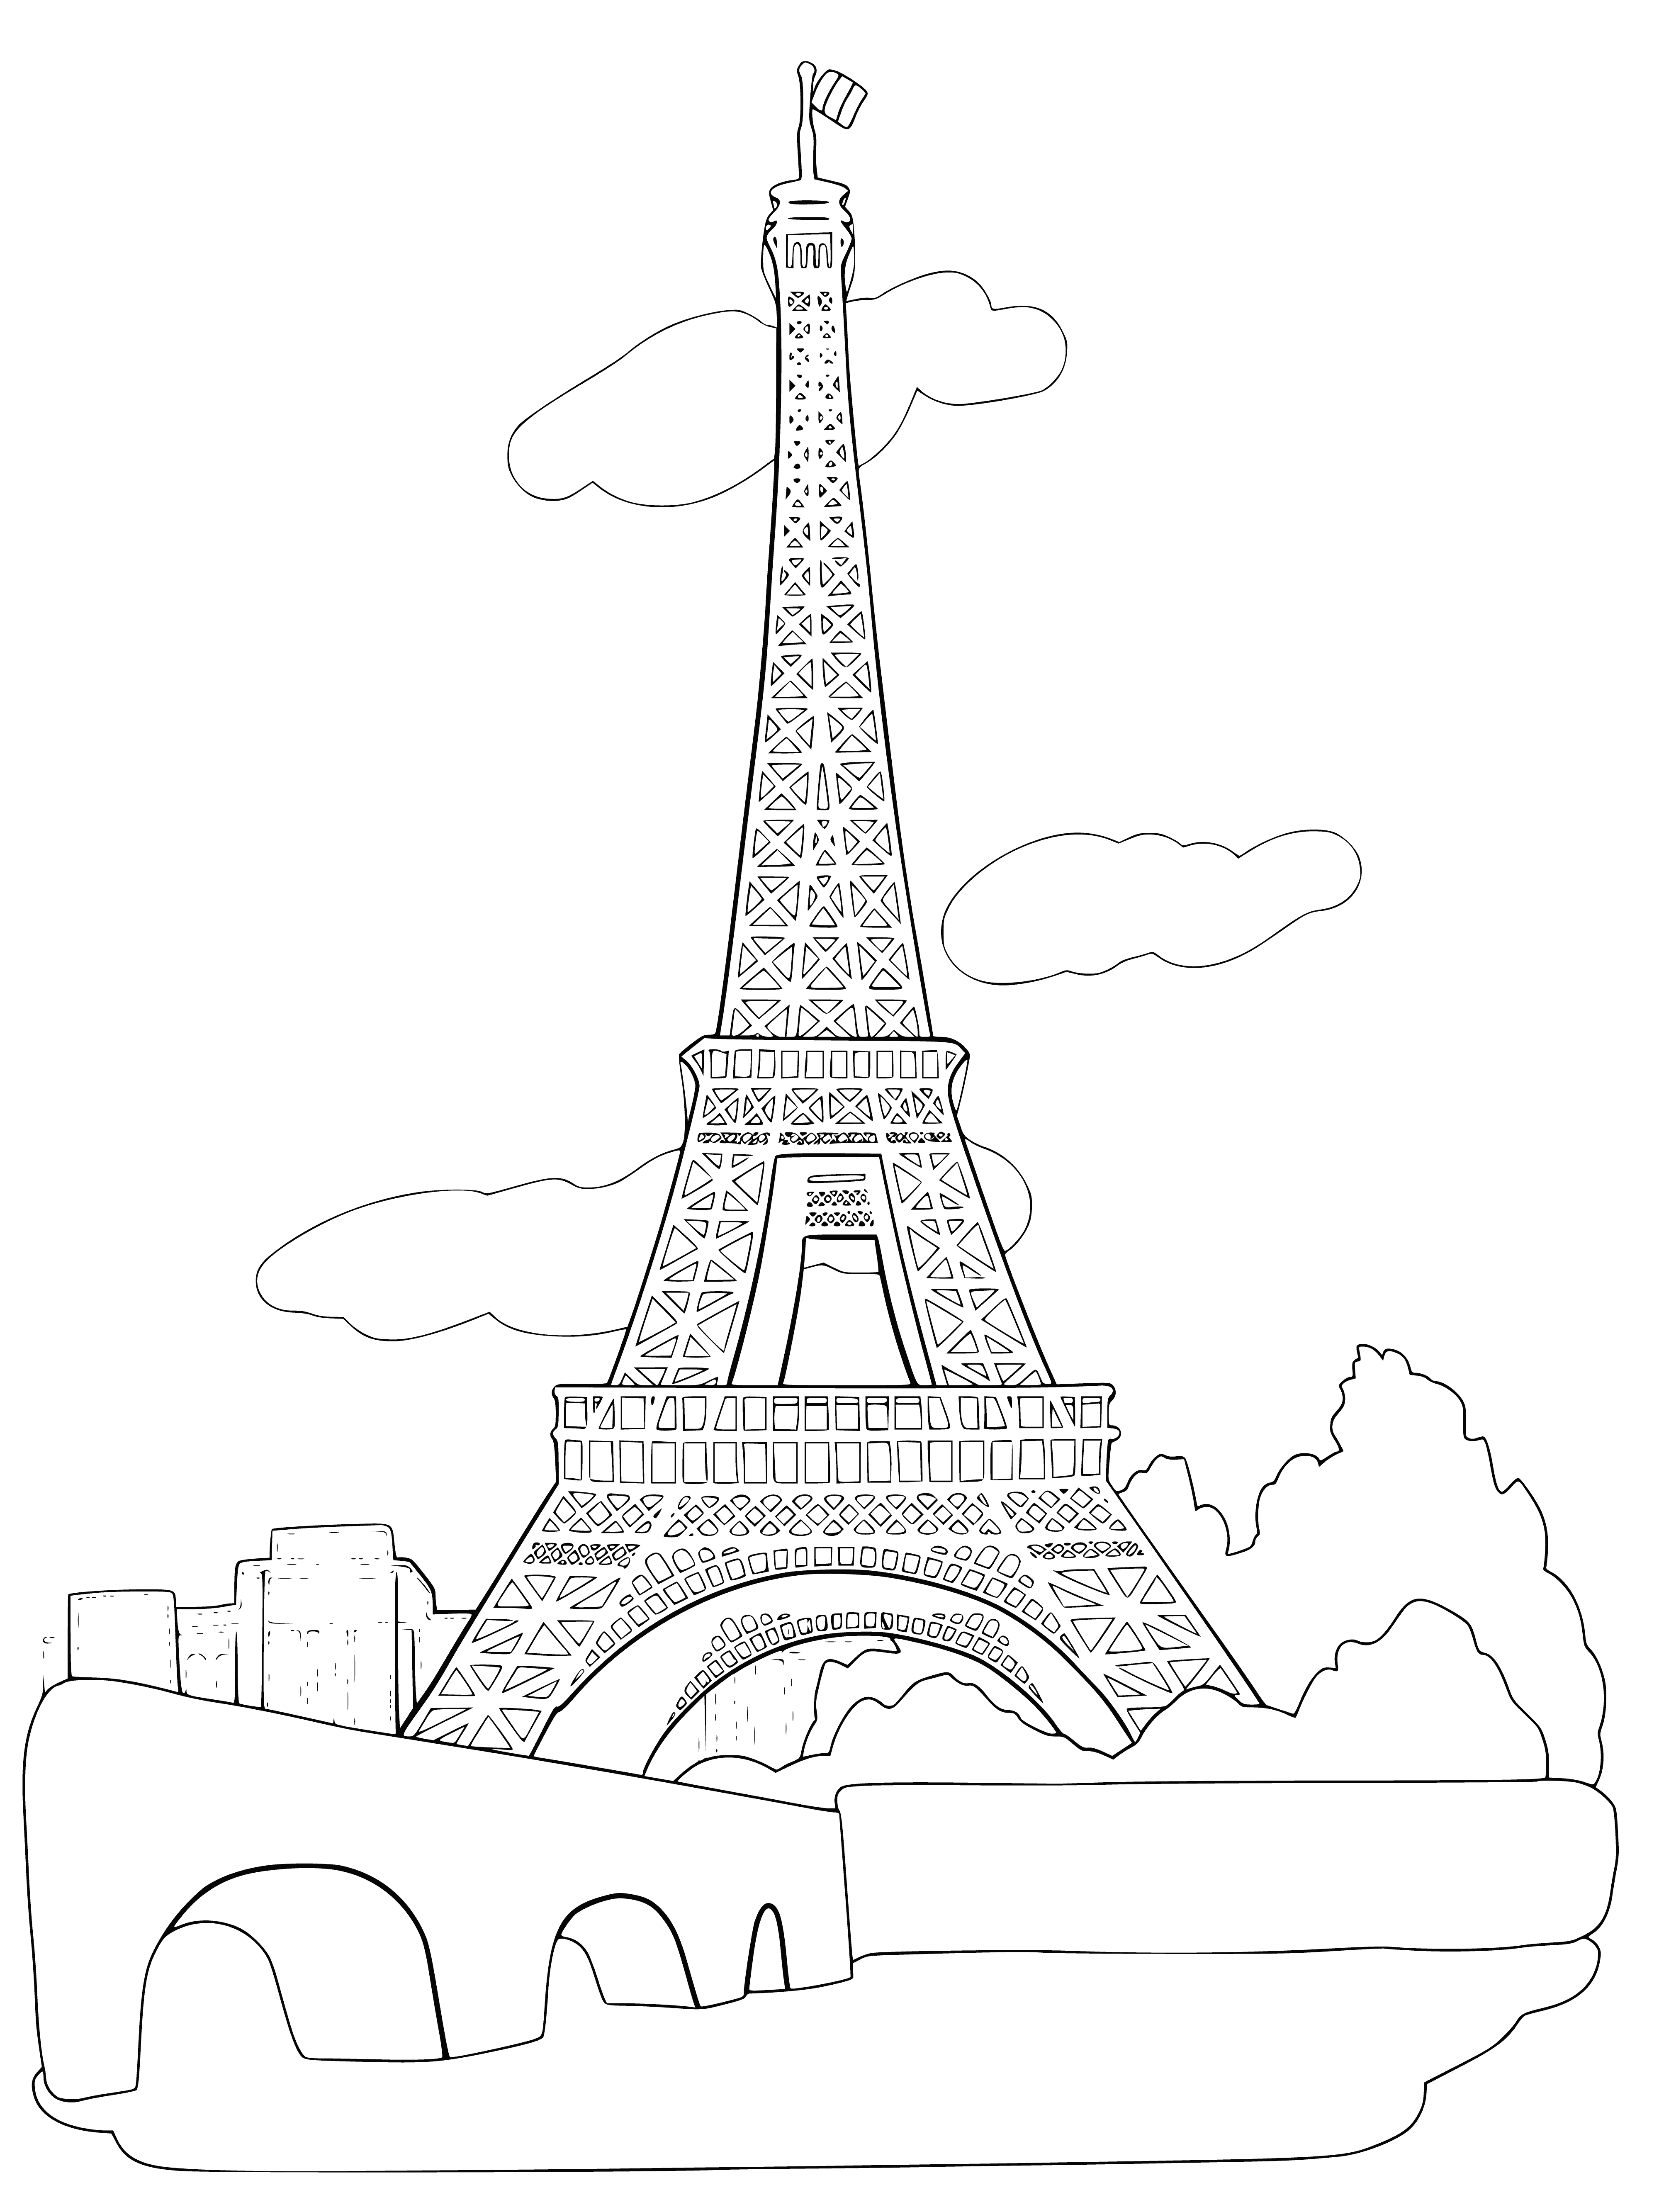 Eiffeltoring in Parys. Frankryk inkleurbladsy